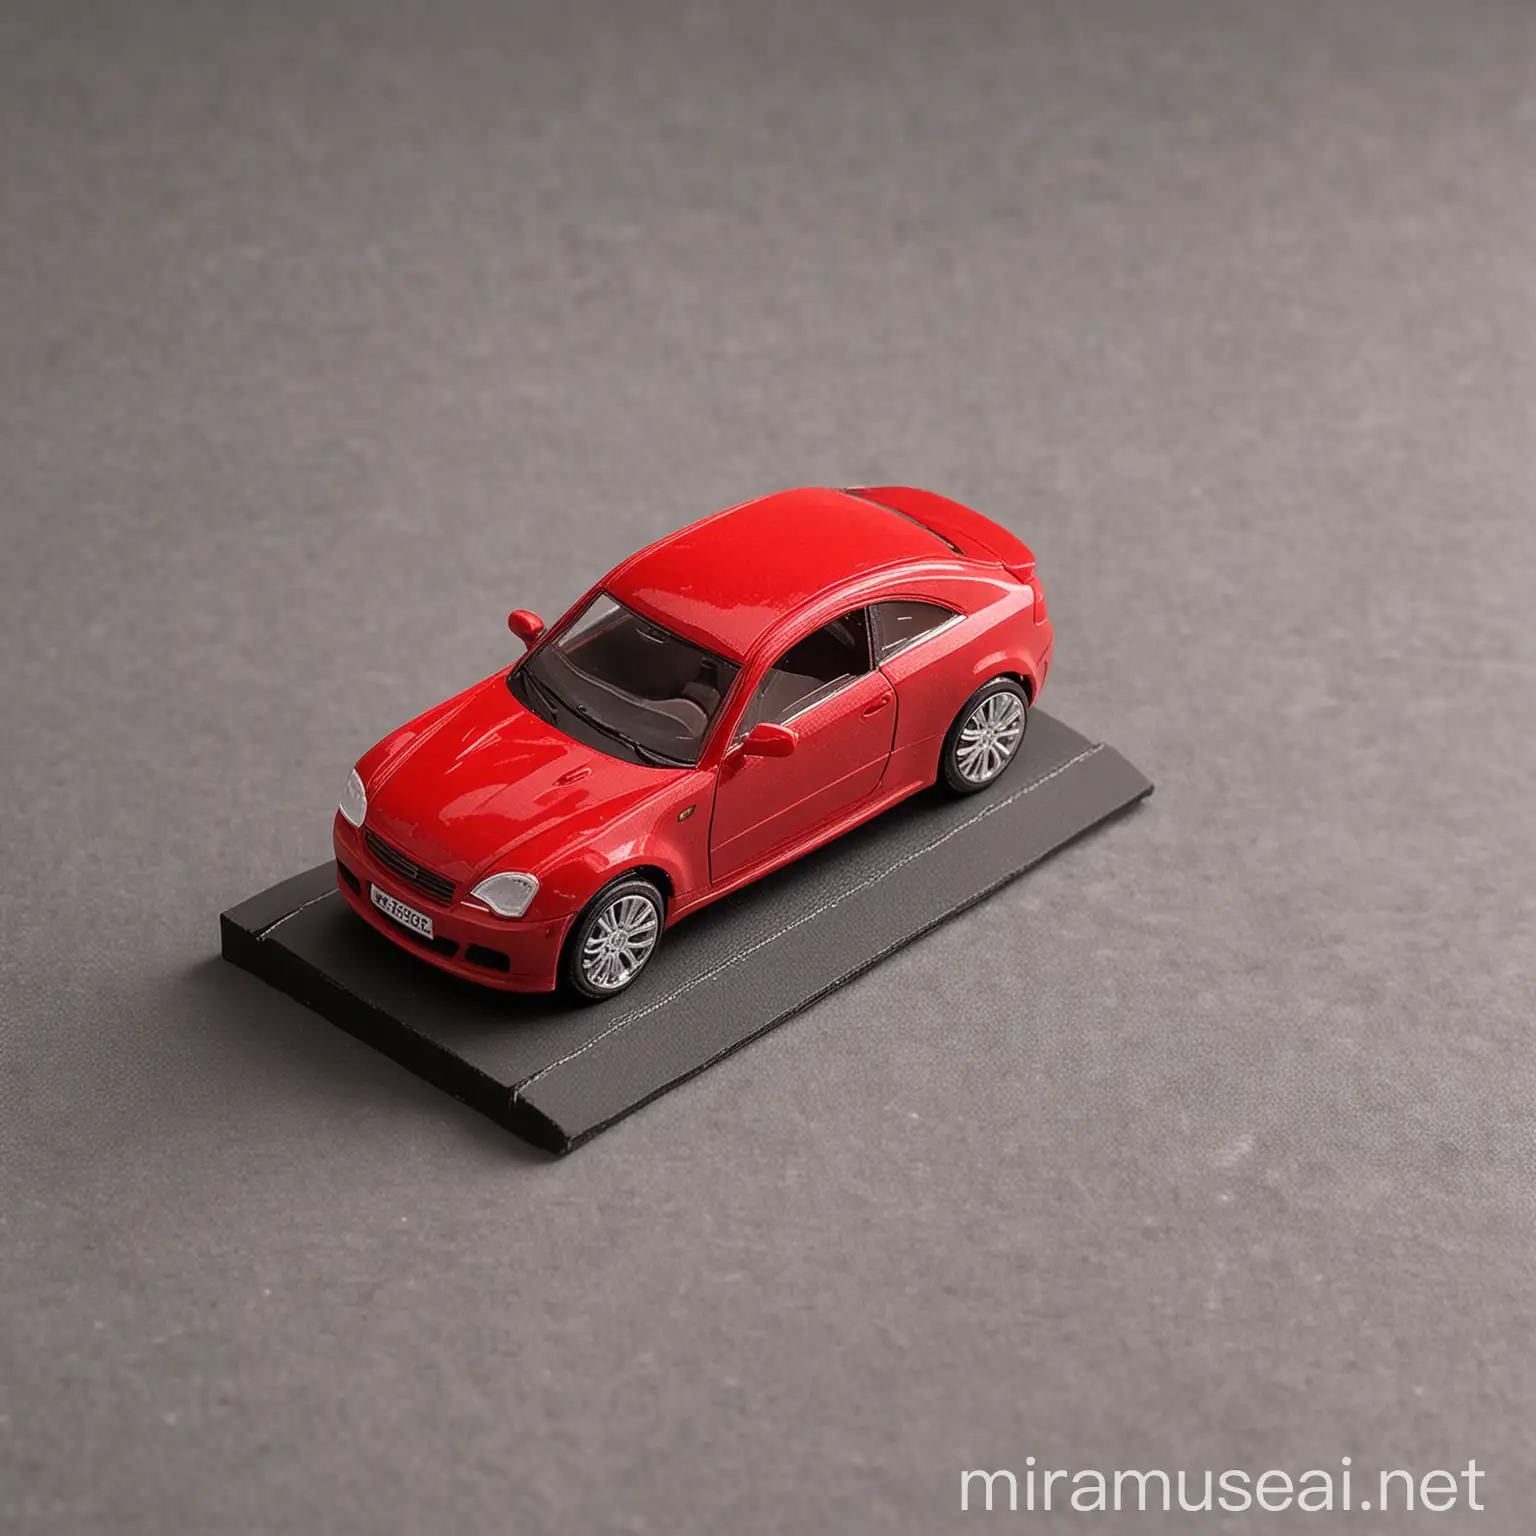 Miniature Modern Red Car Racing Through Urban Streets